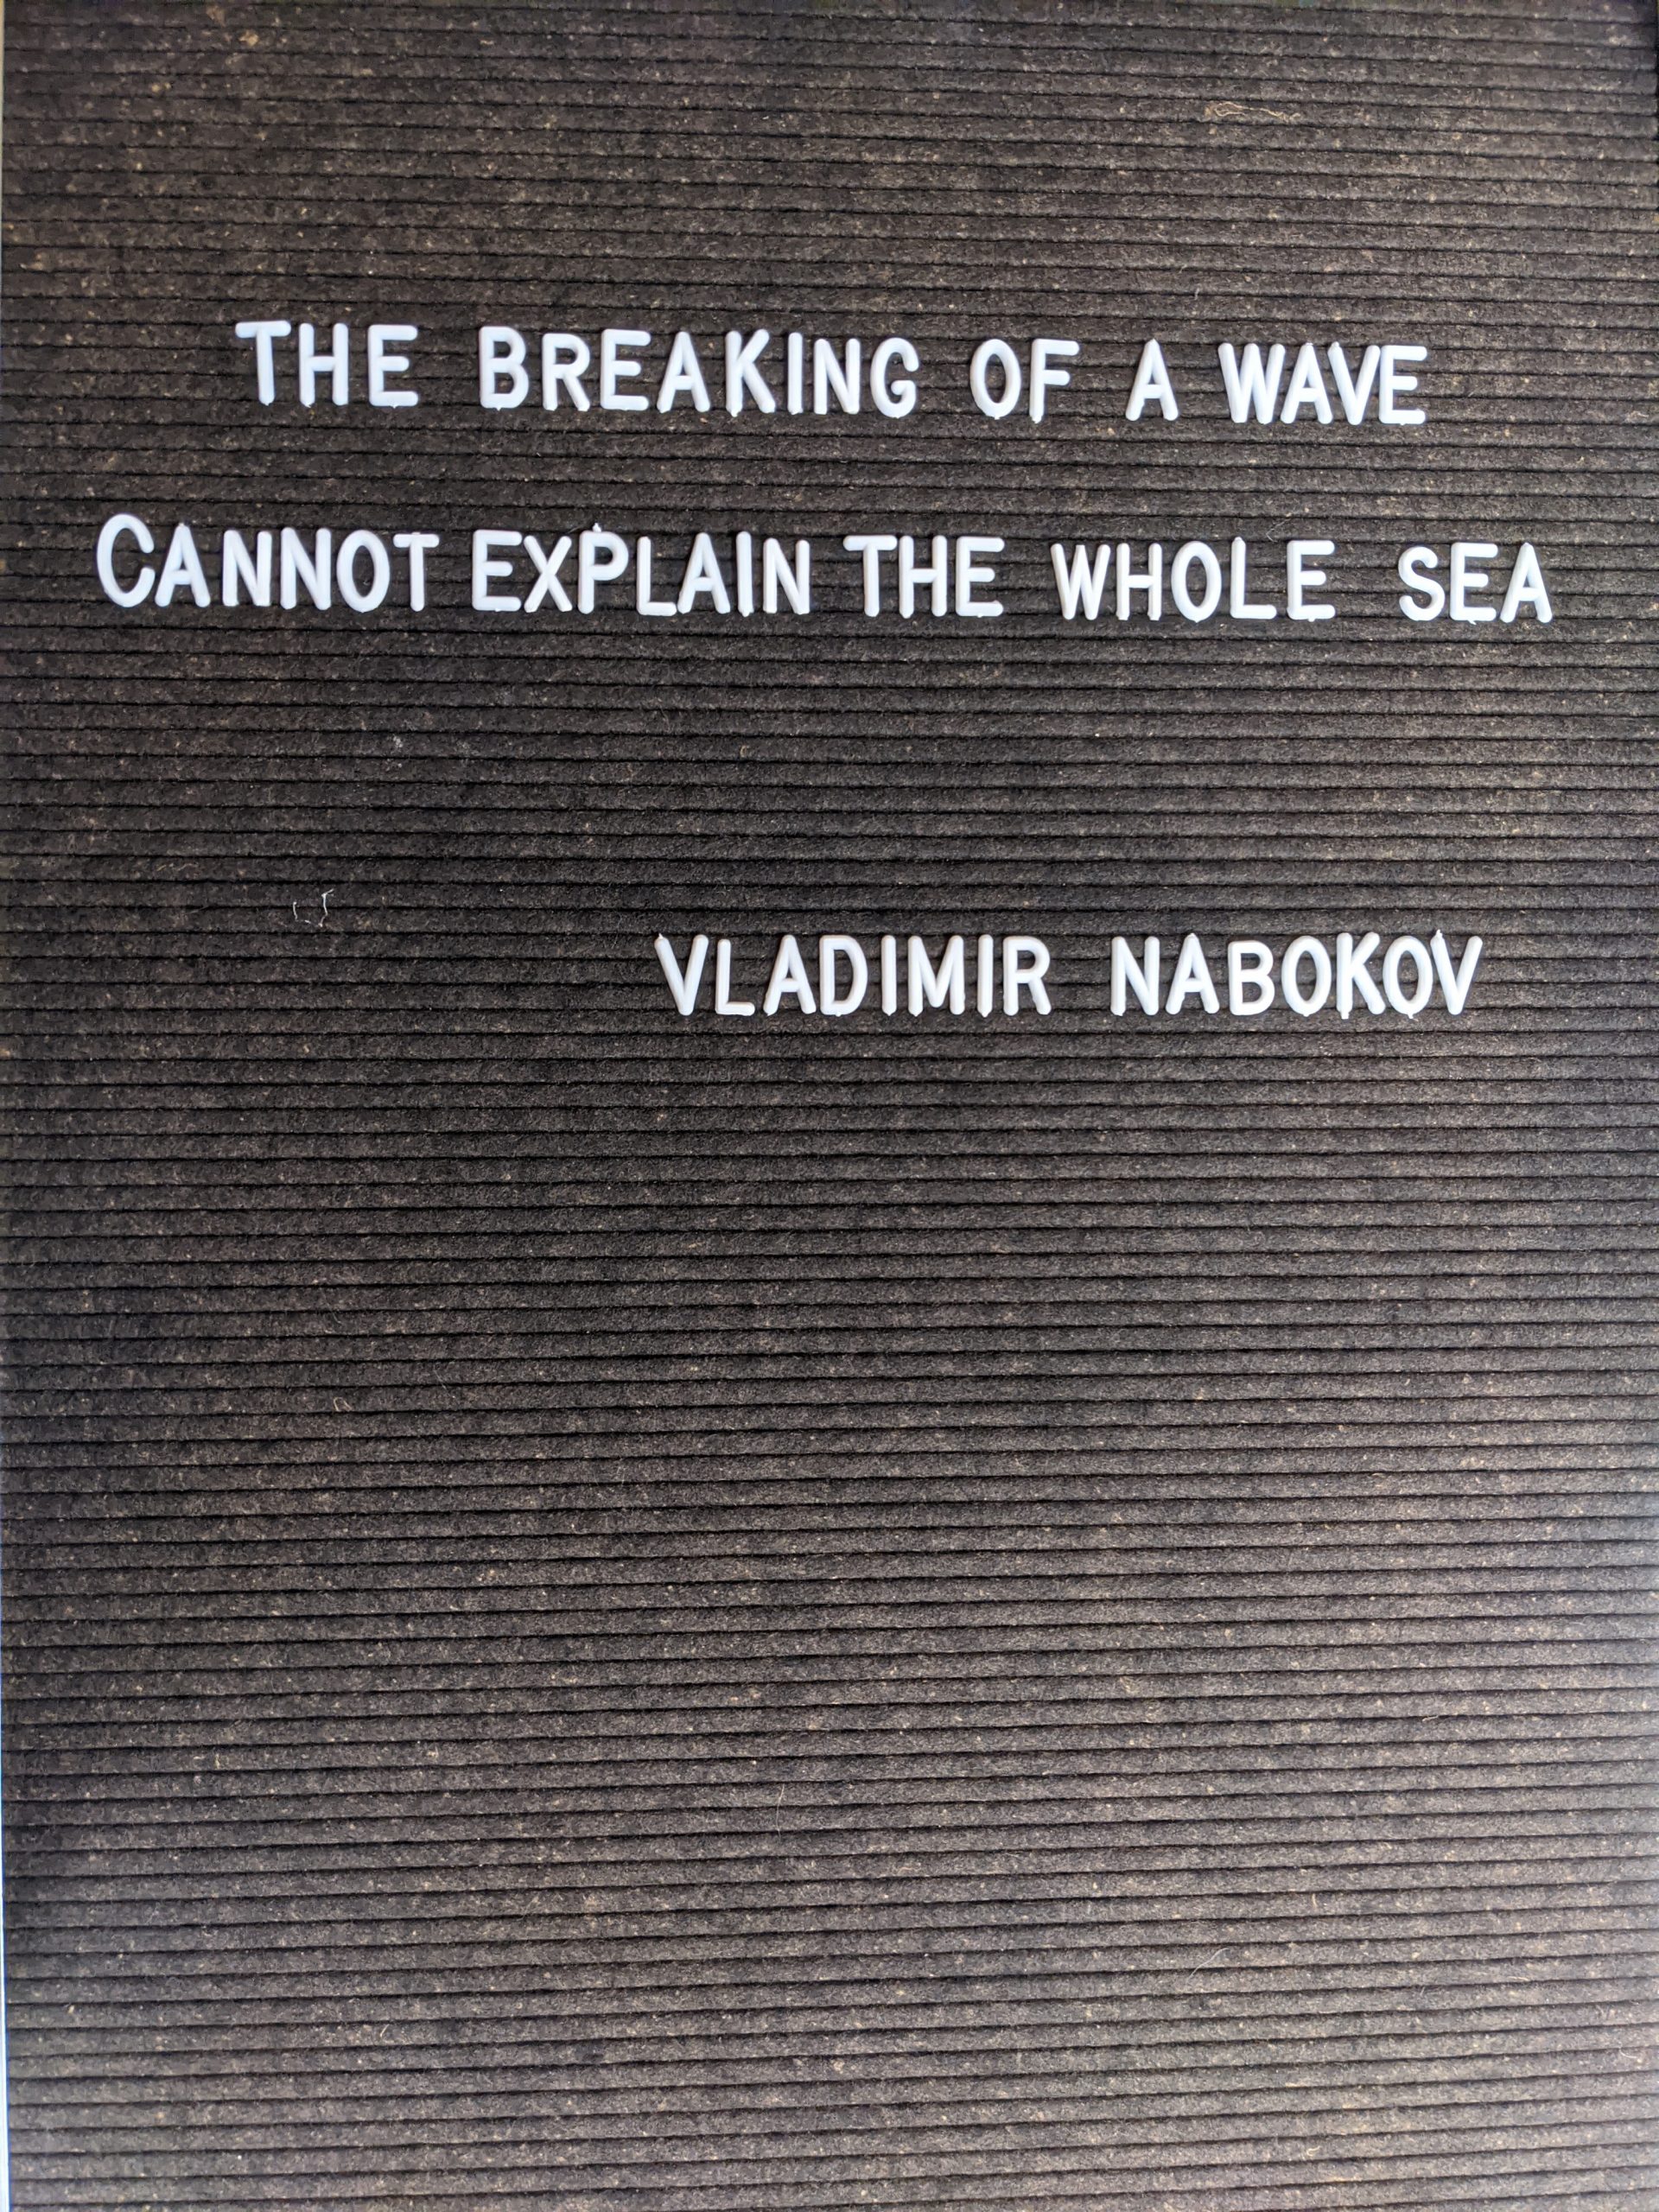 Motivational Quote by Vladimir Nabokov